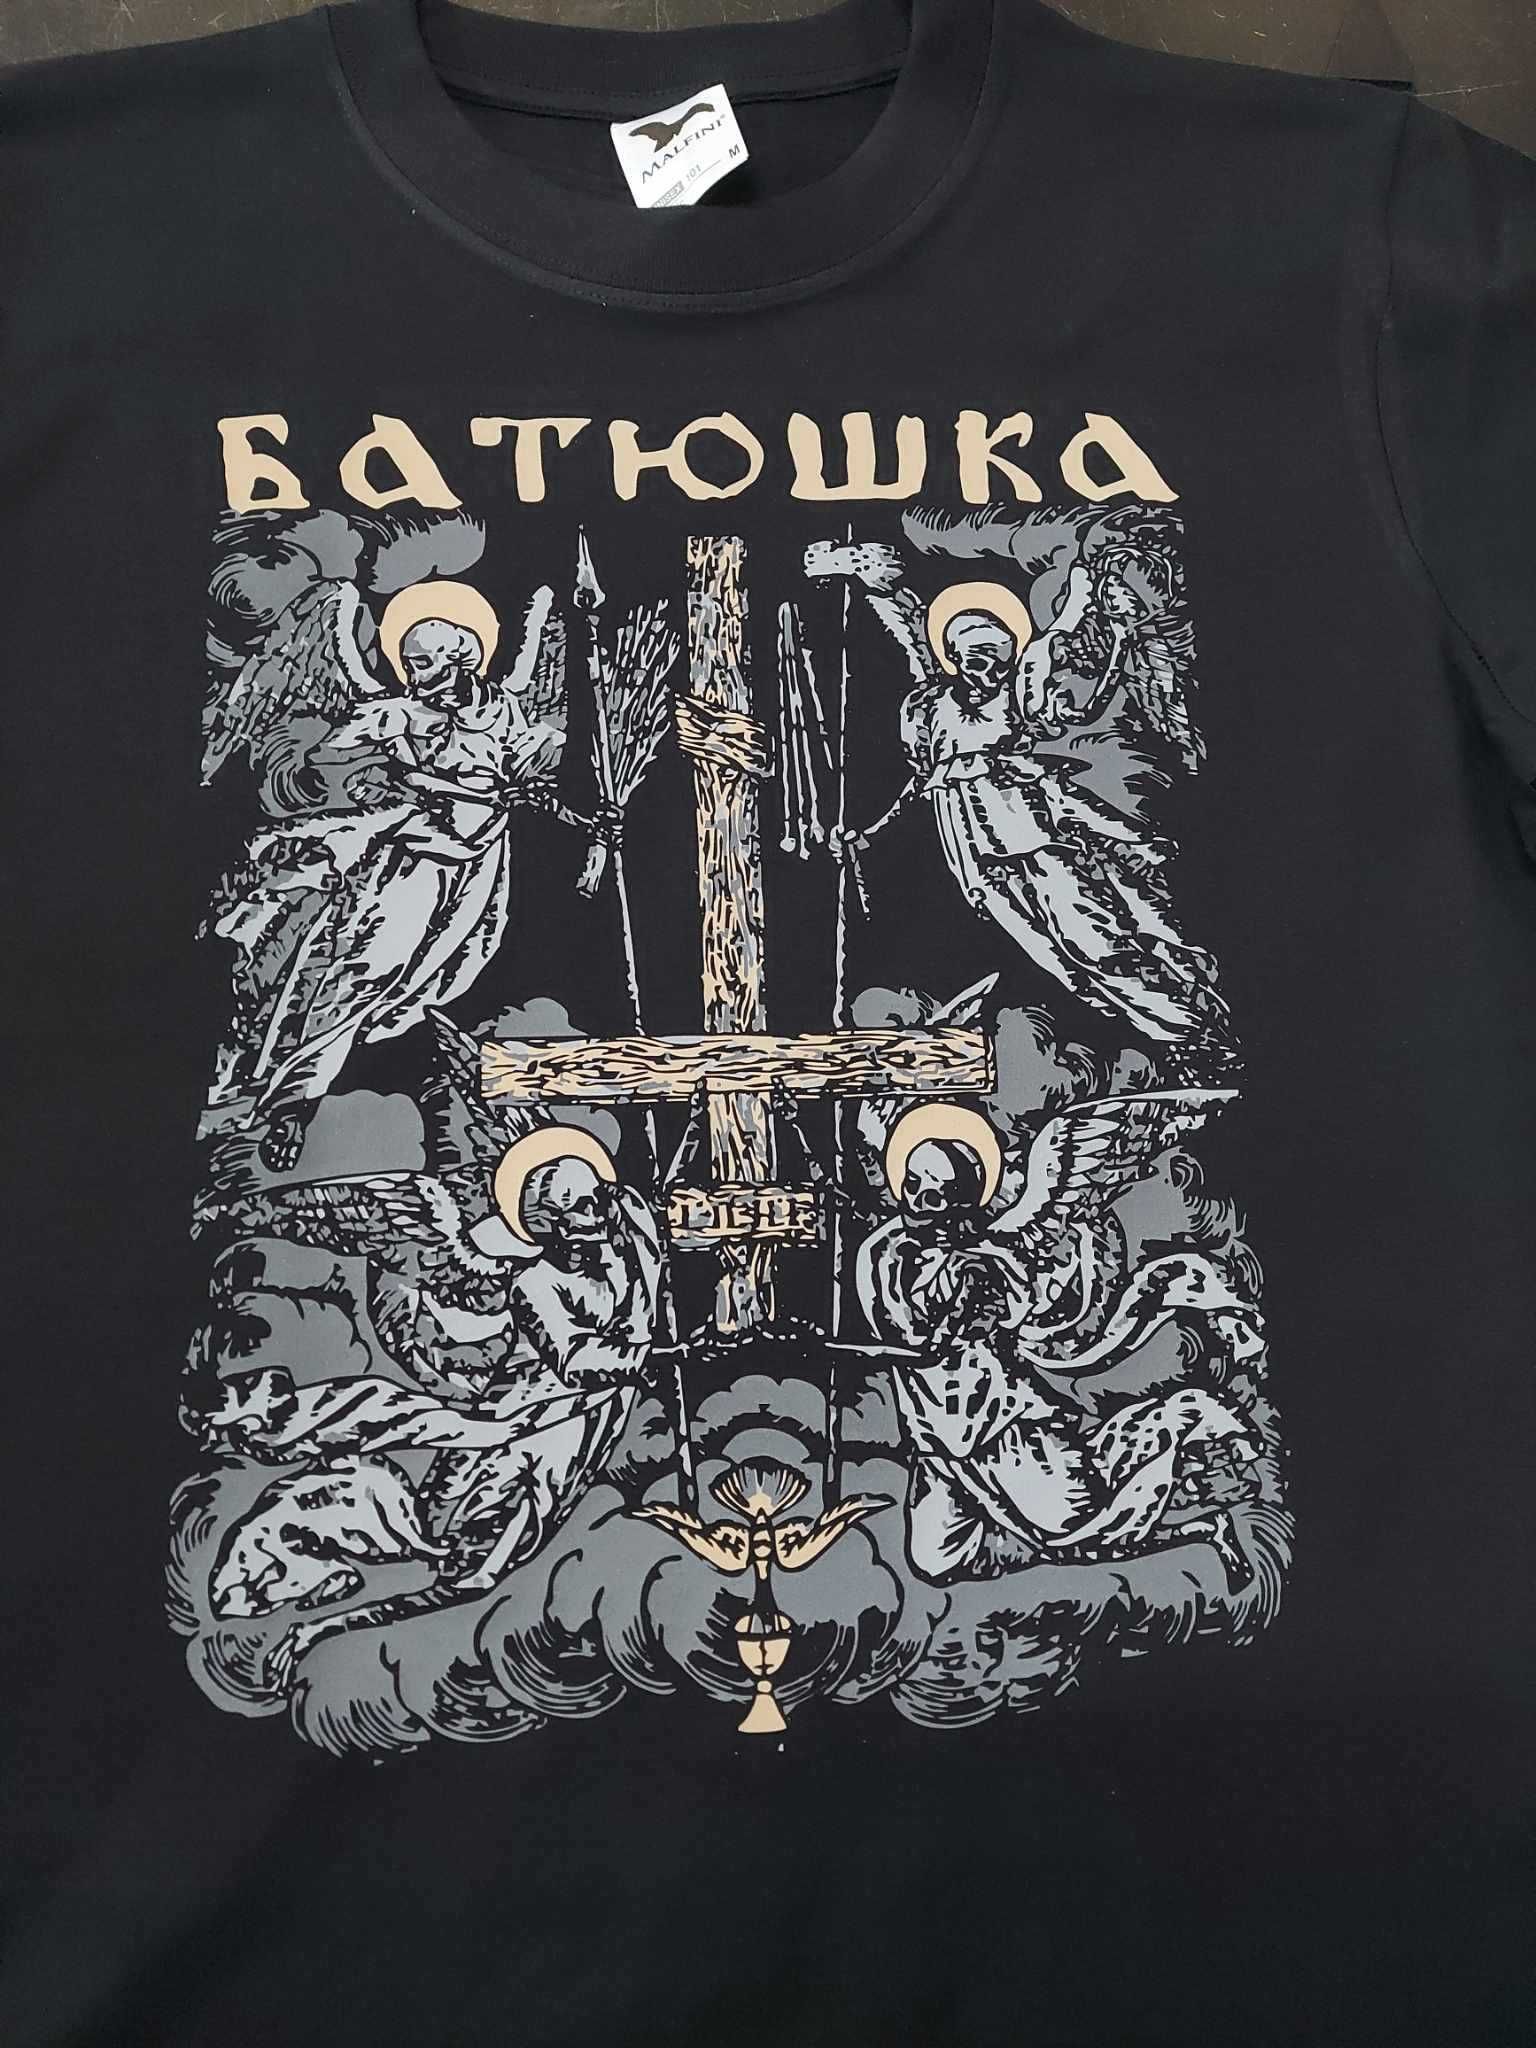 Koszulka t-shirt Batushka black metal nieużywana roz. M 100% bawełna